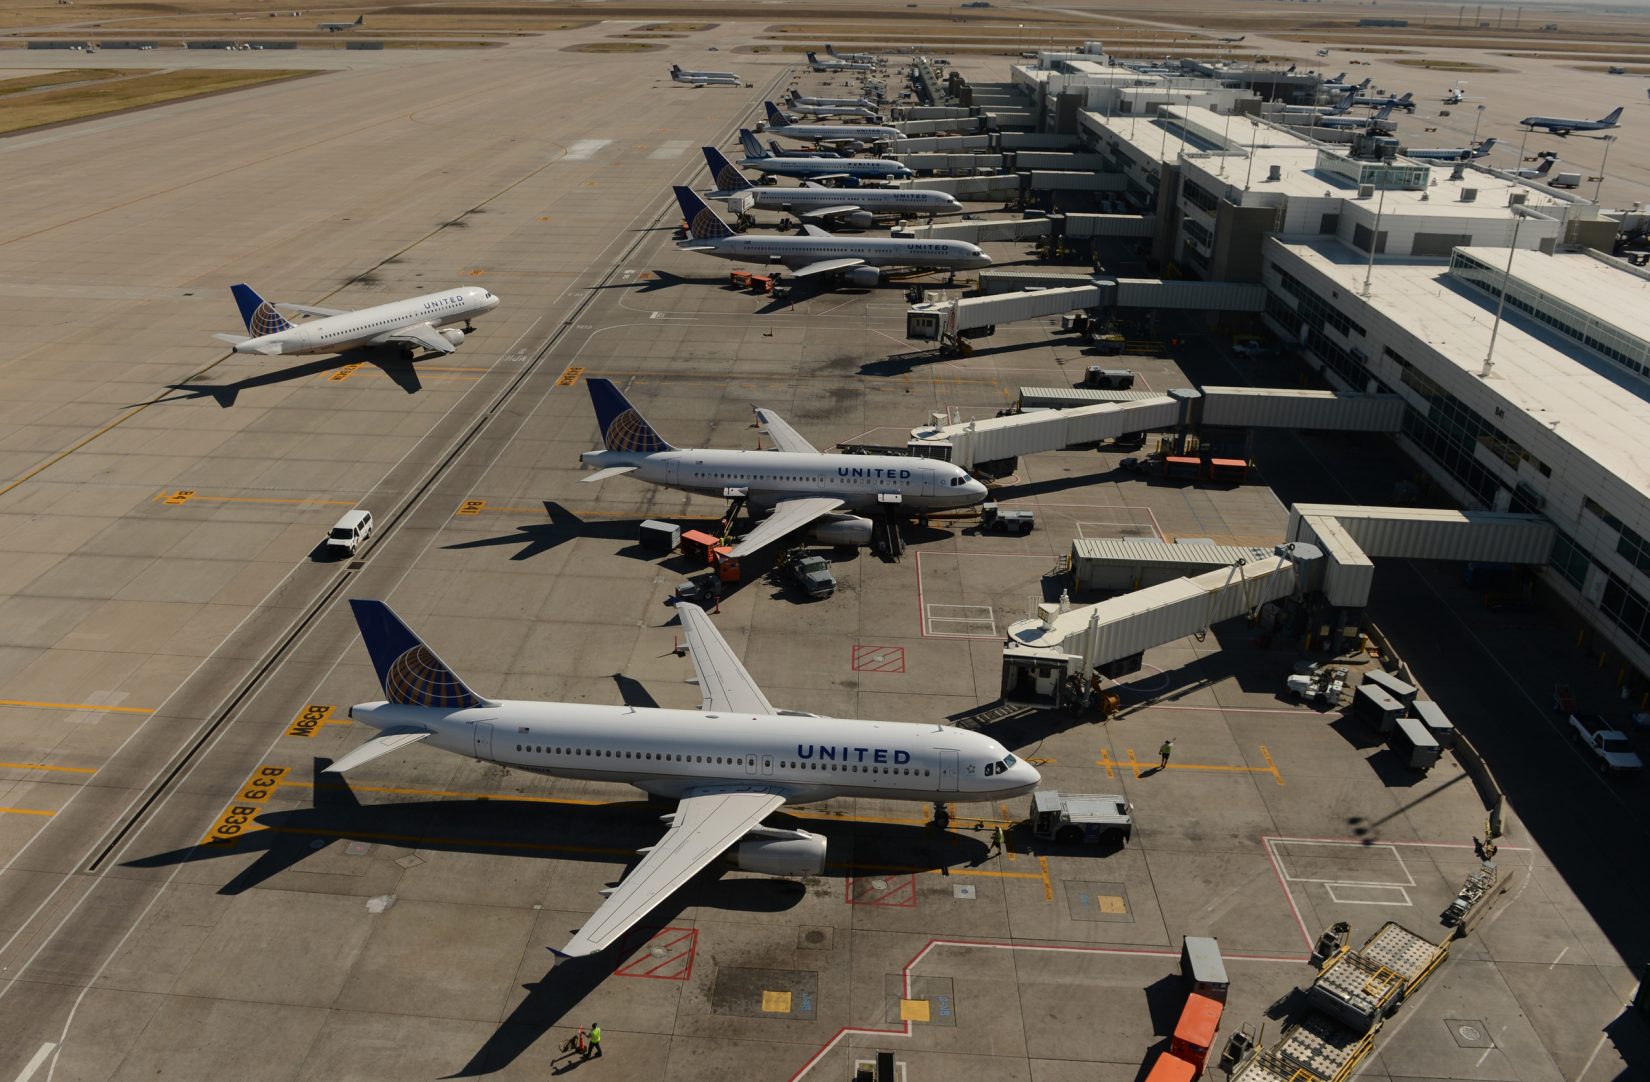 Will we see an increase of traffic at Denver International Airport because of Colorado's liberal marijuana laws?